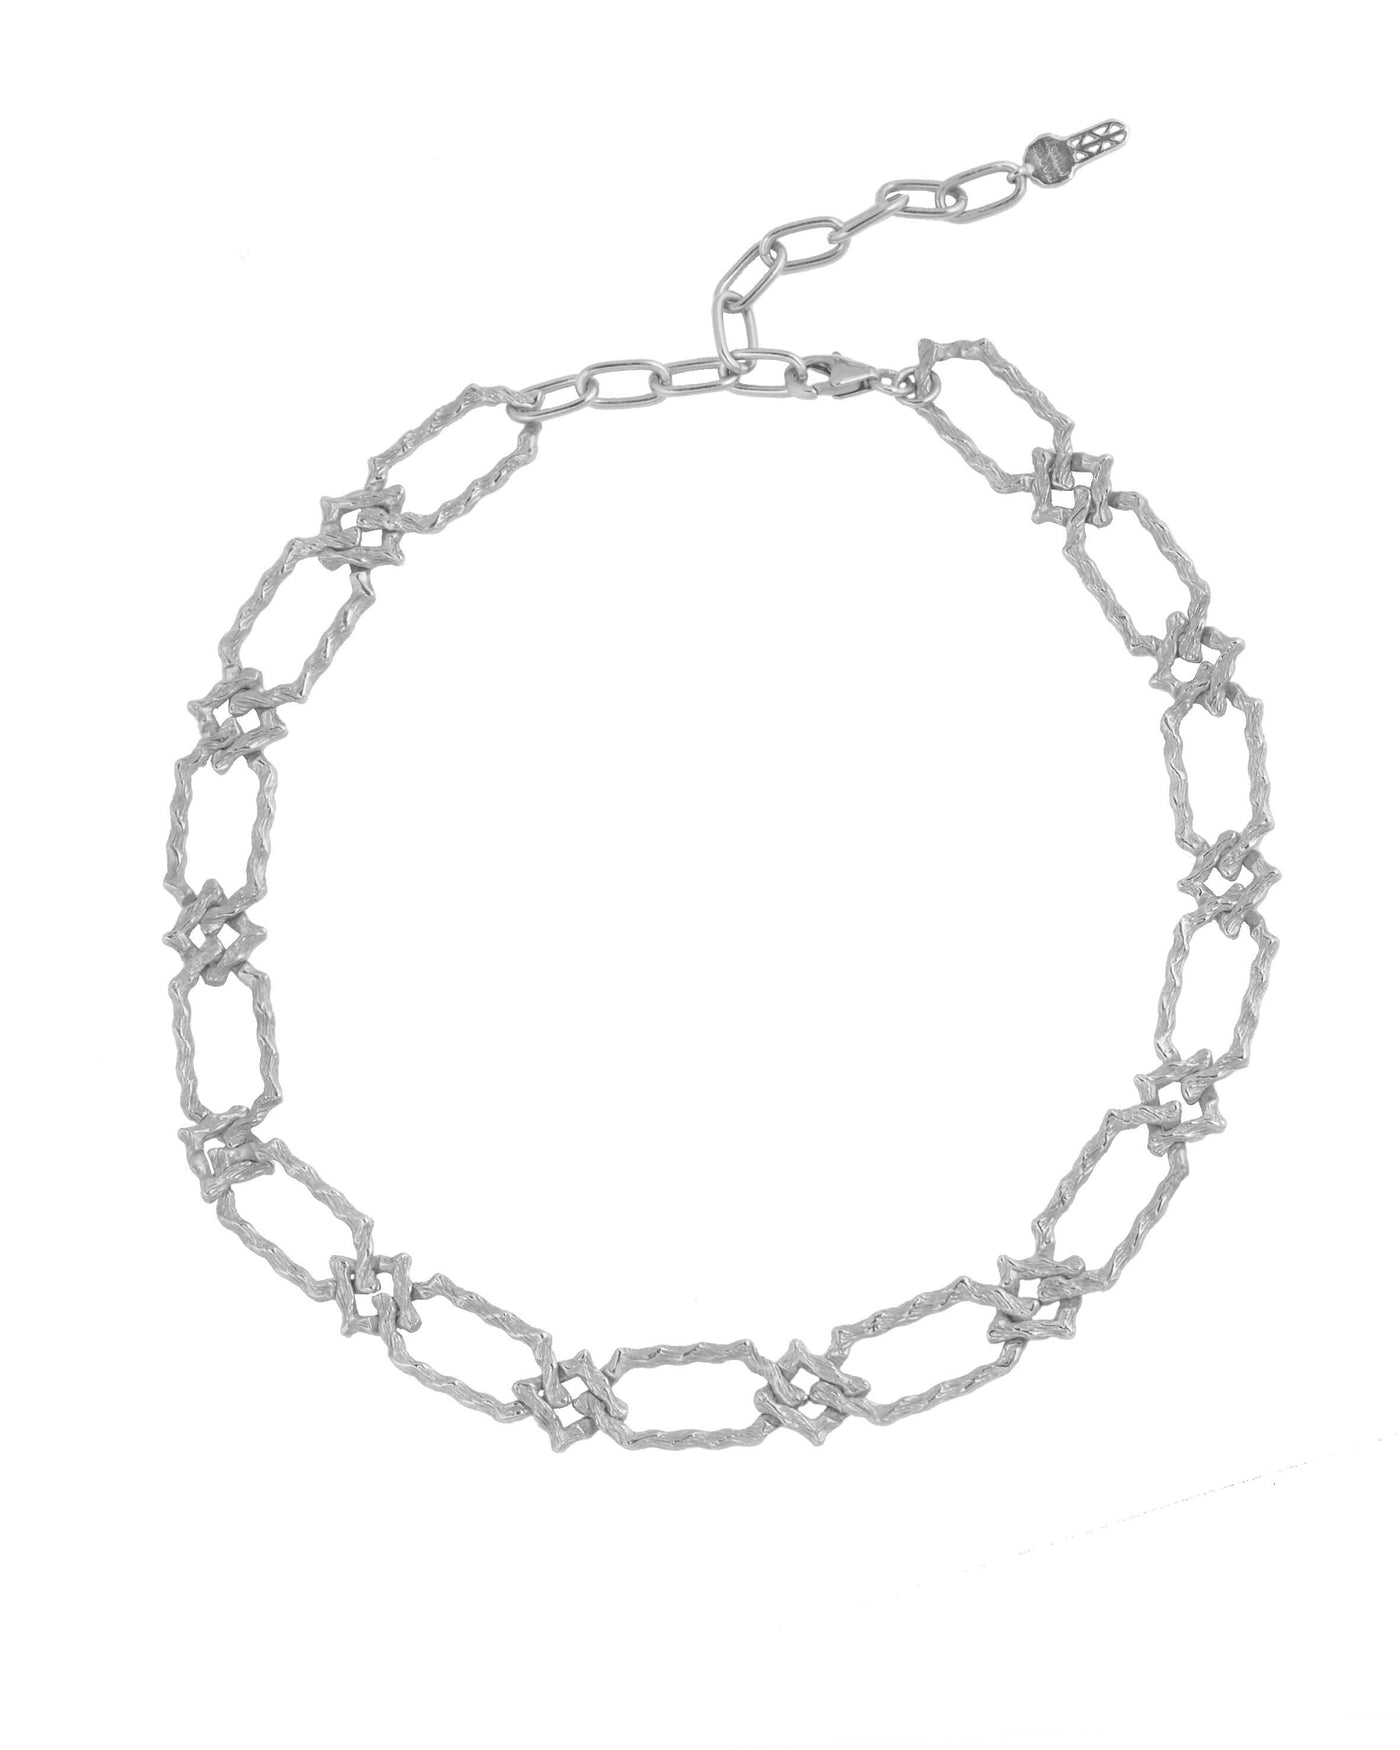 Handmade antique chain link choker. Silver